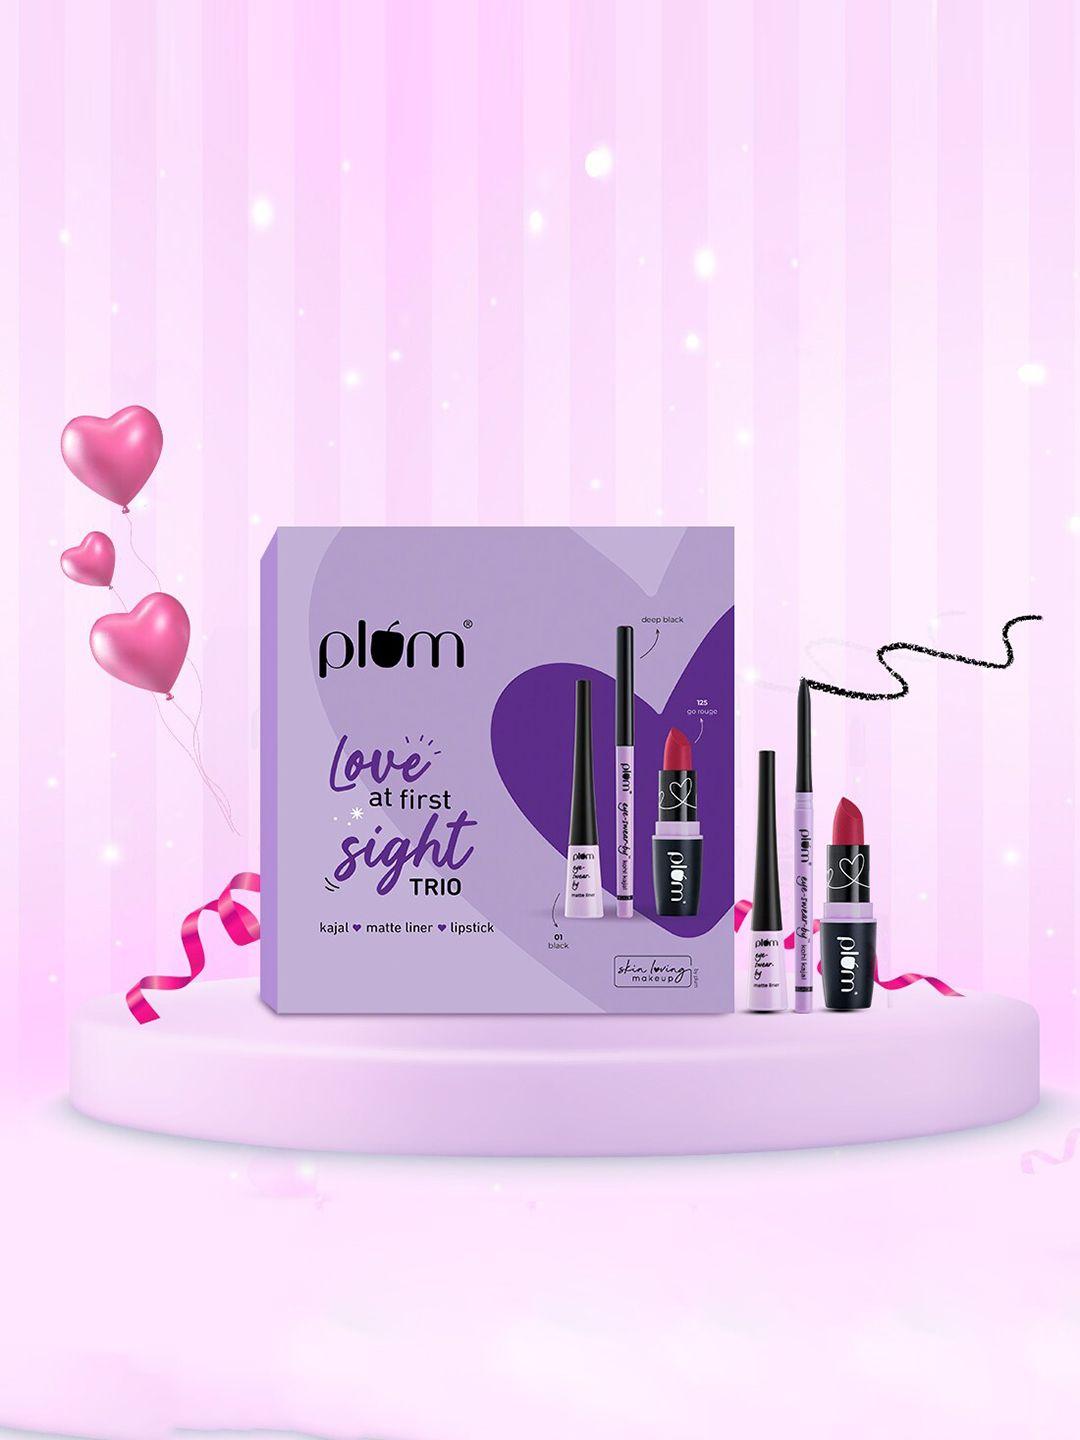 plum love at first sight trio-kajal - deep black+matte eye liner-black 01+lipstick 125